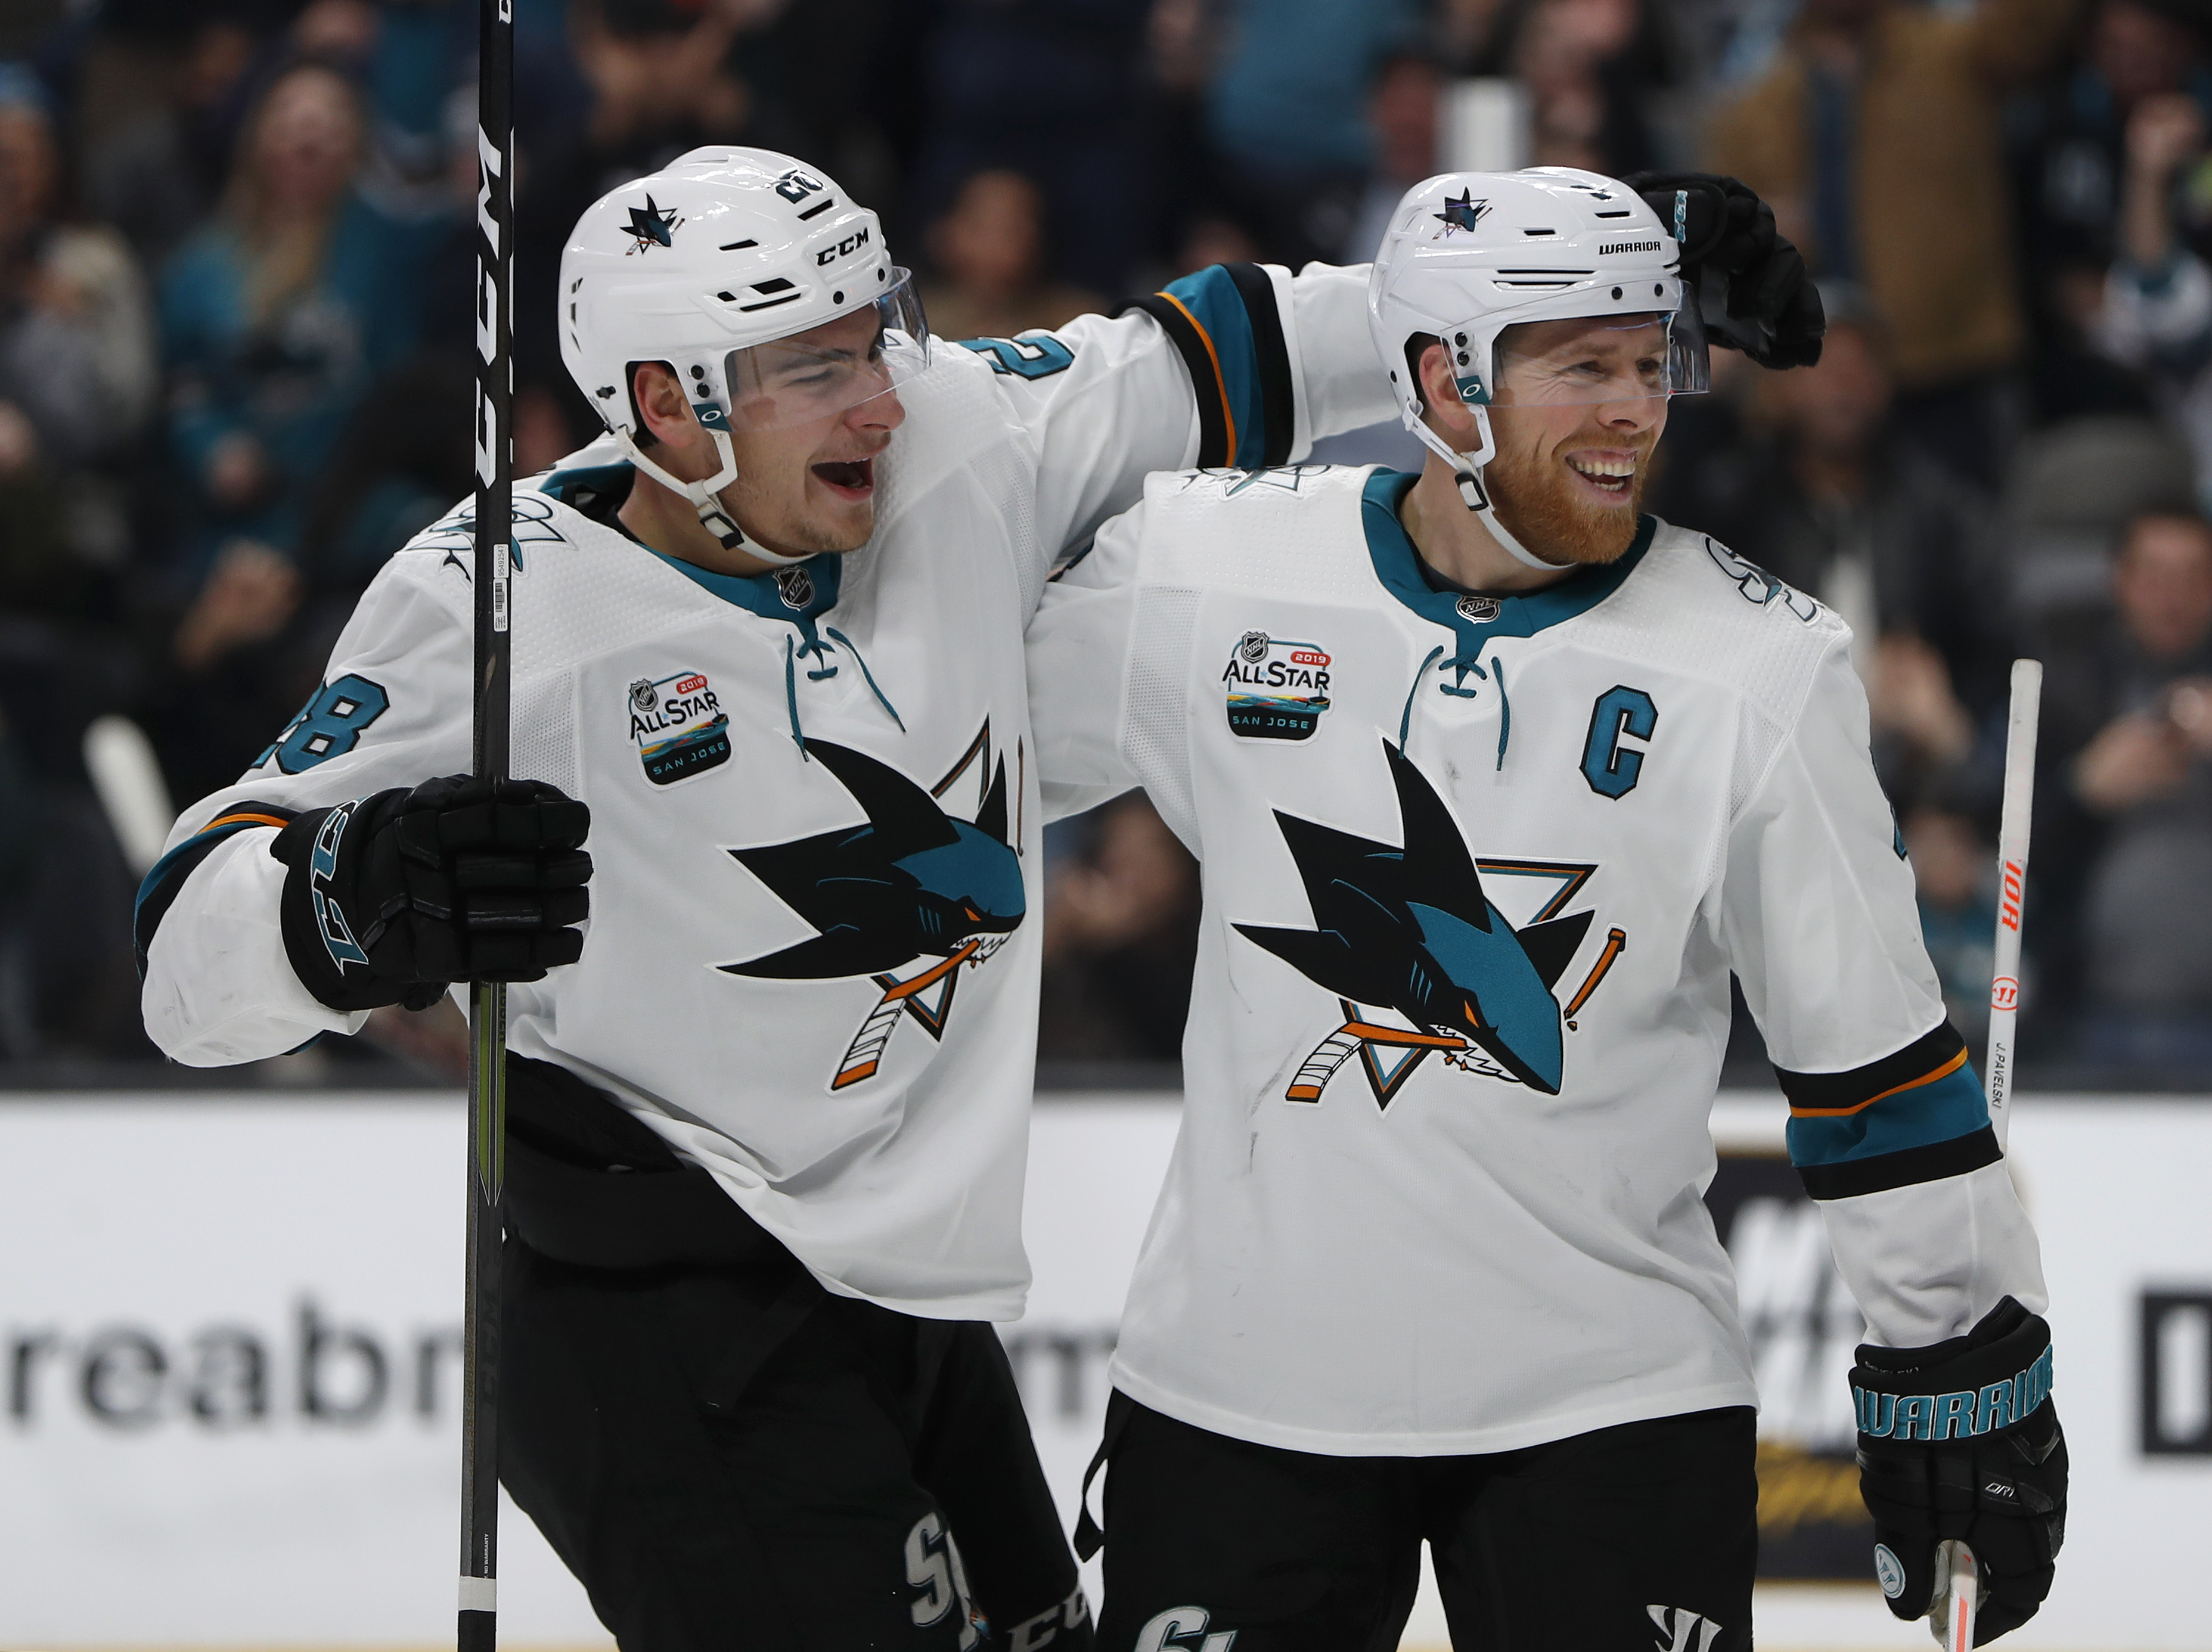 NHL All Star Game: Sharks center Joe Pavelski keeps chugging